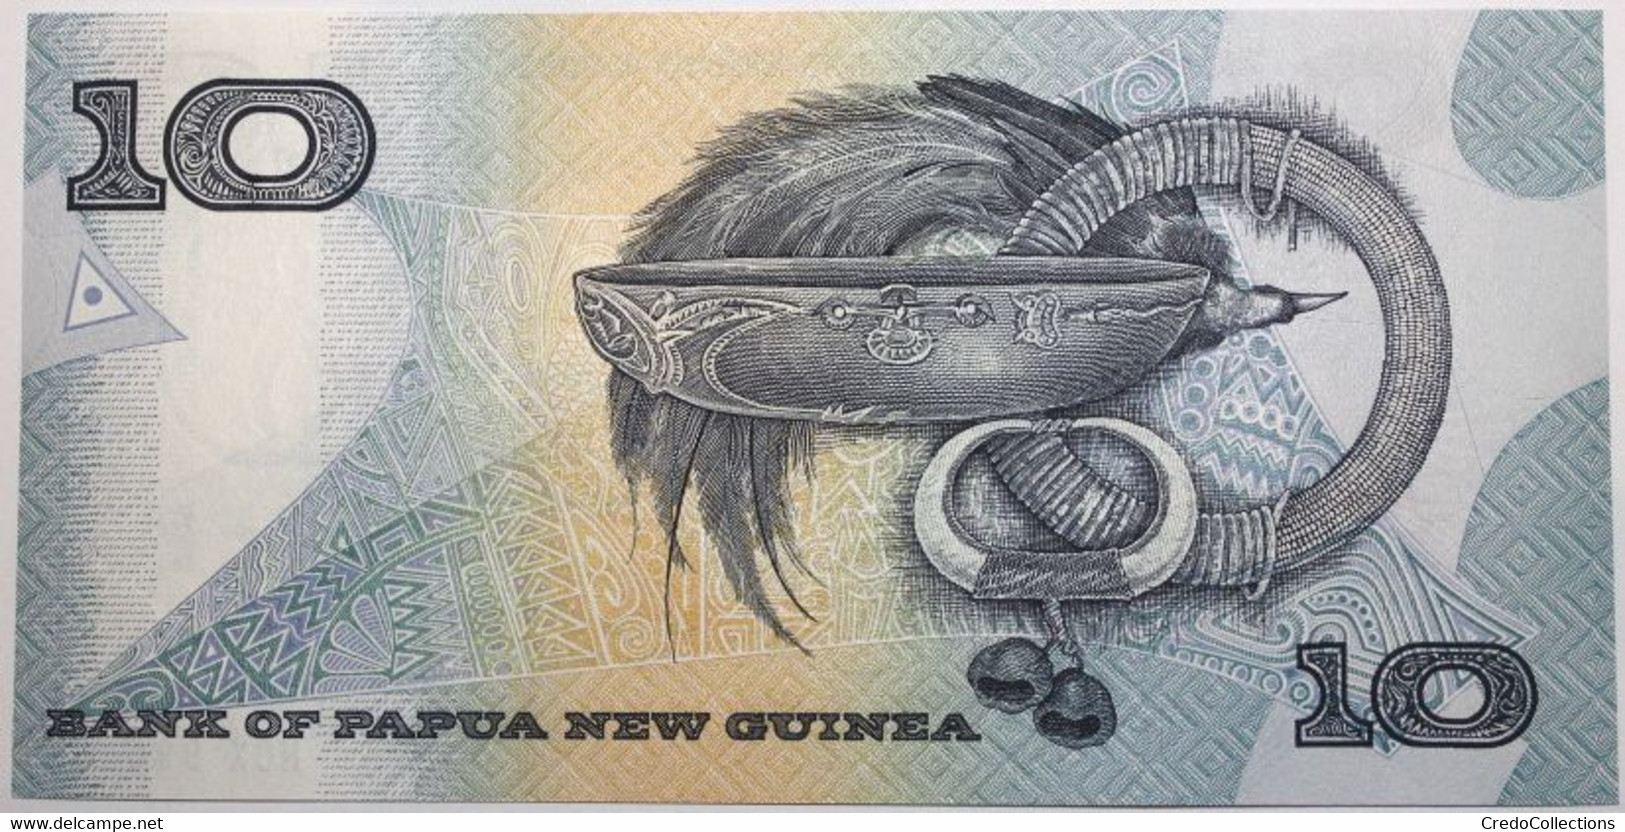 Papouasie-Nouvelle Guinée - 10 Kina - 1995 - PICK 9c - NEUF - Papoea-Nieuw-Guinea